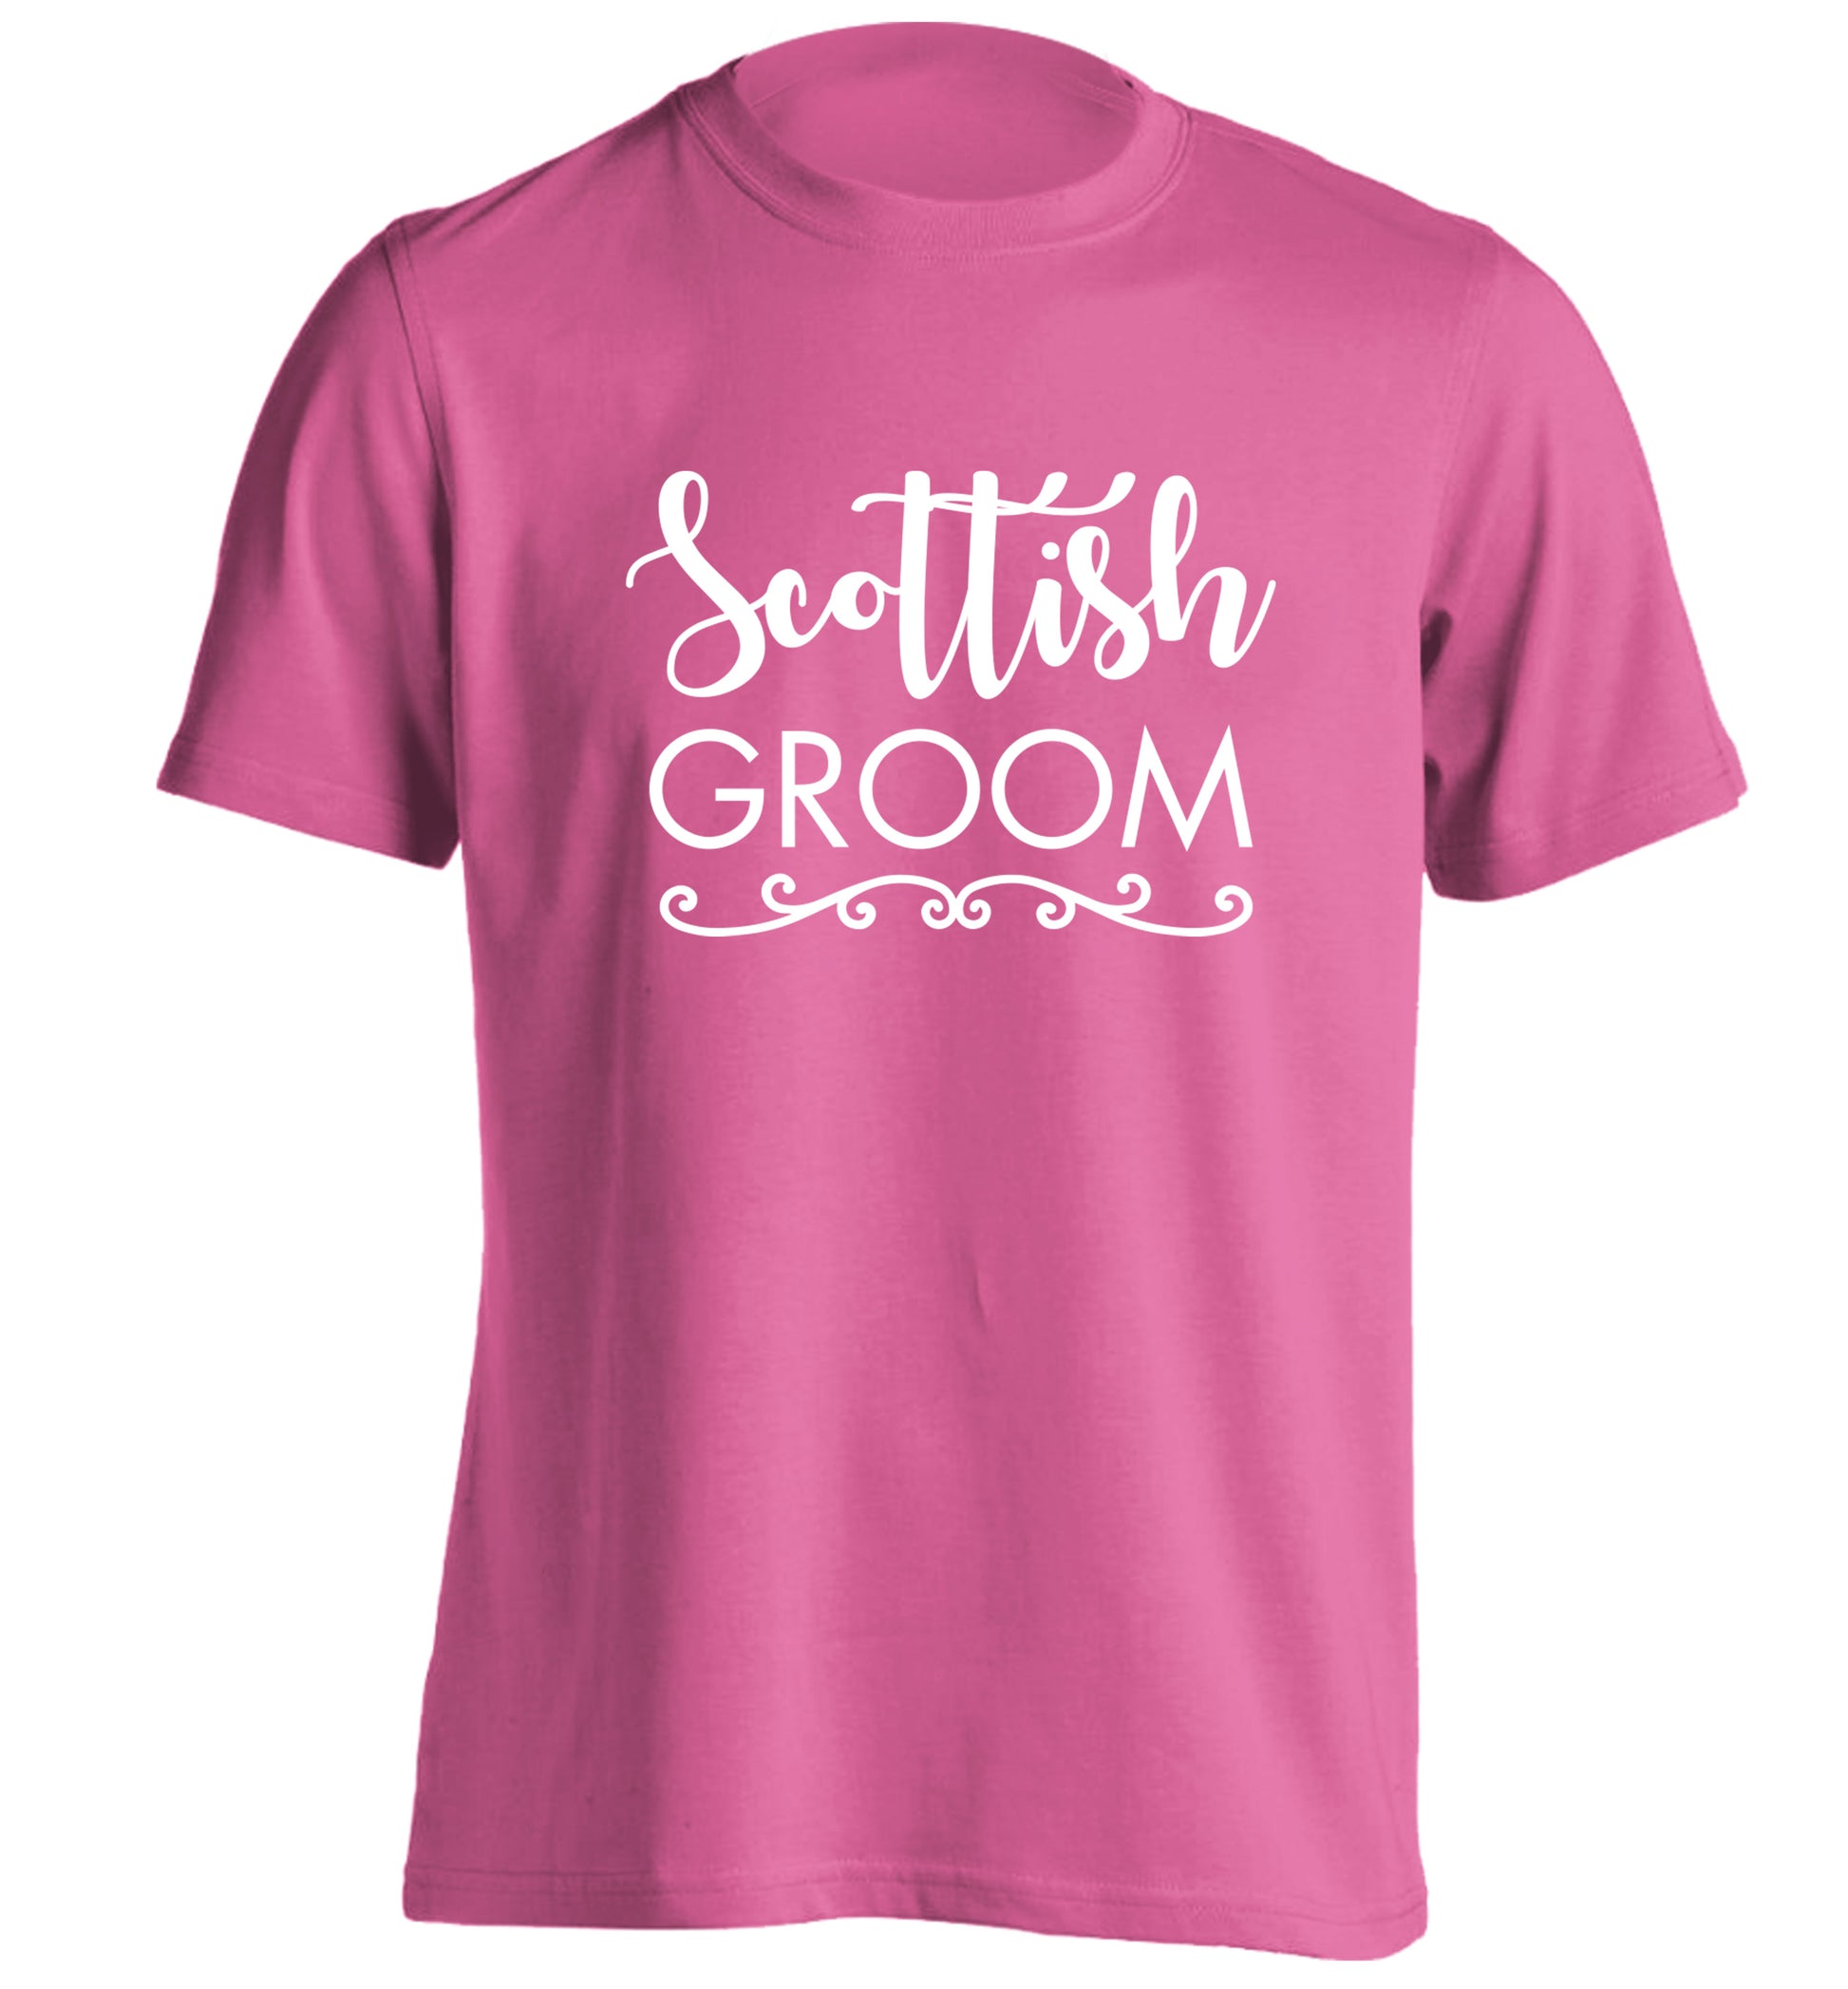 Scottish groom adults unisex pink Tshirt 2XL